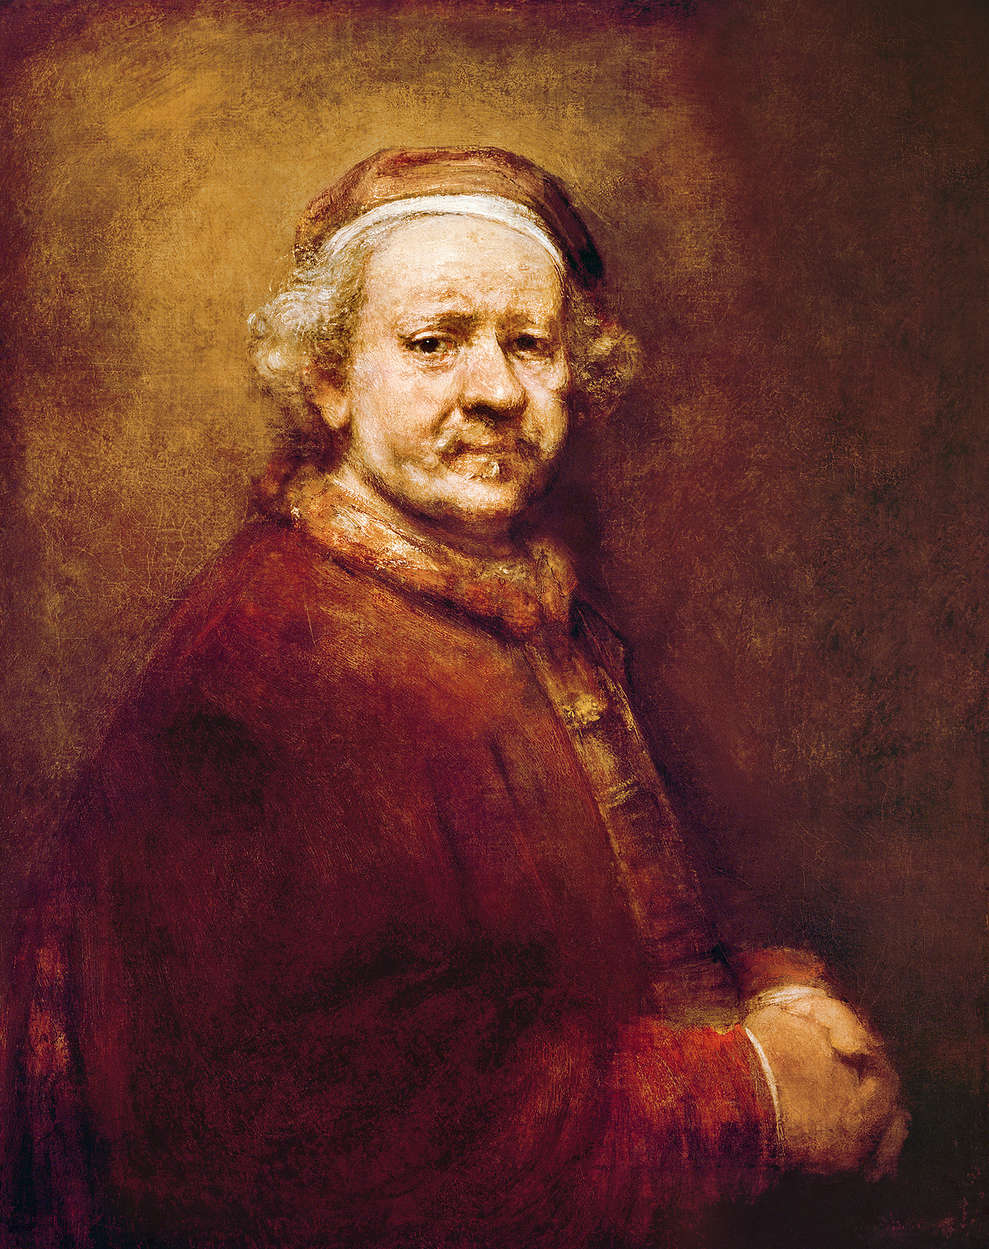             Autoritratto" murale di Rembrandt van Rijn
        